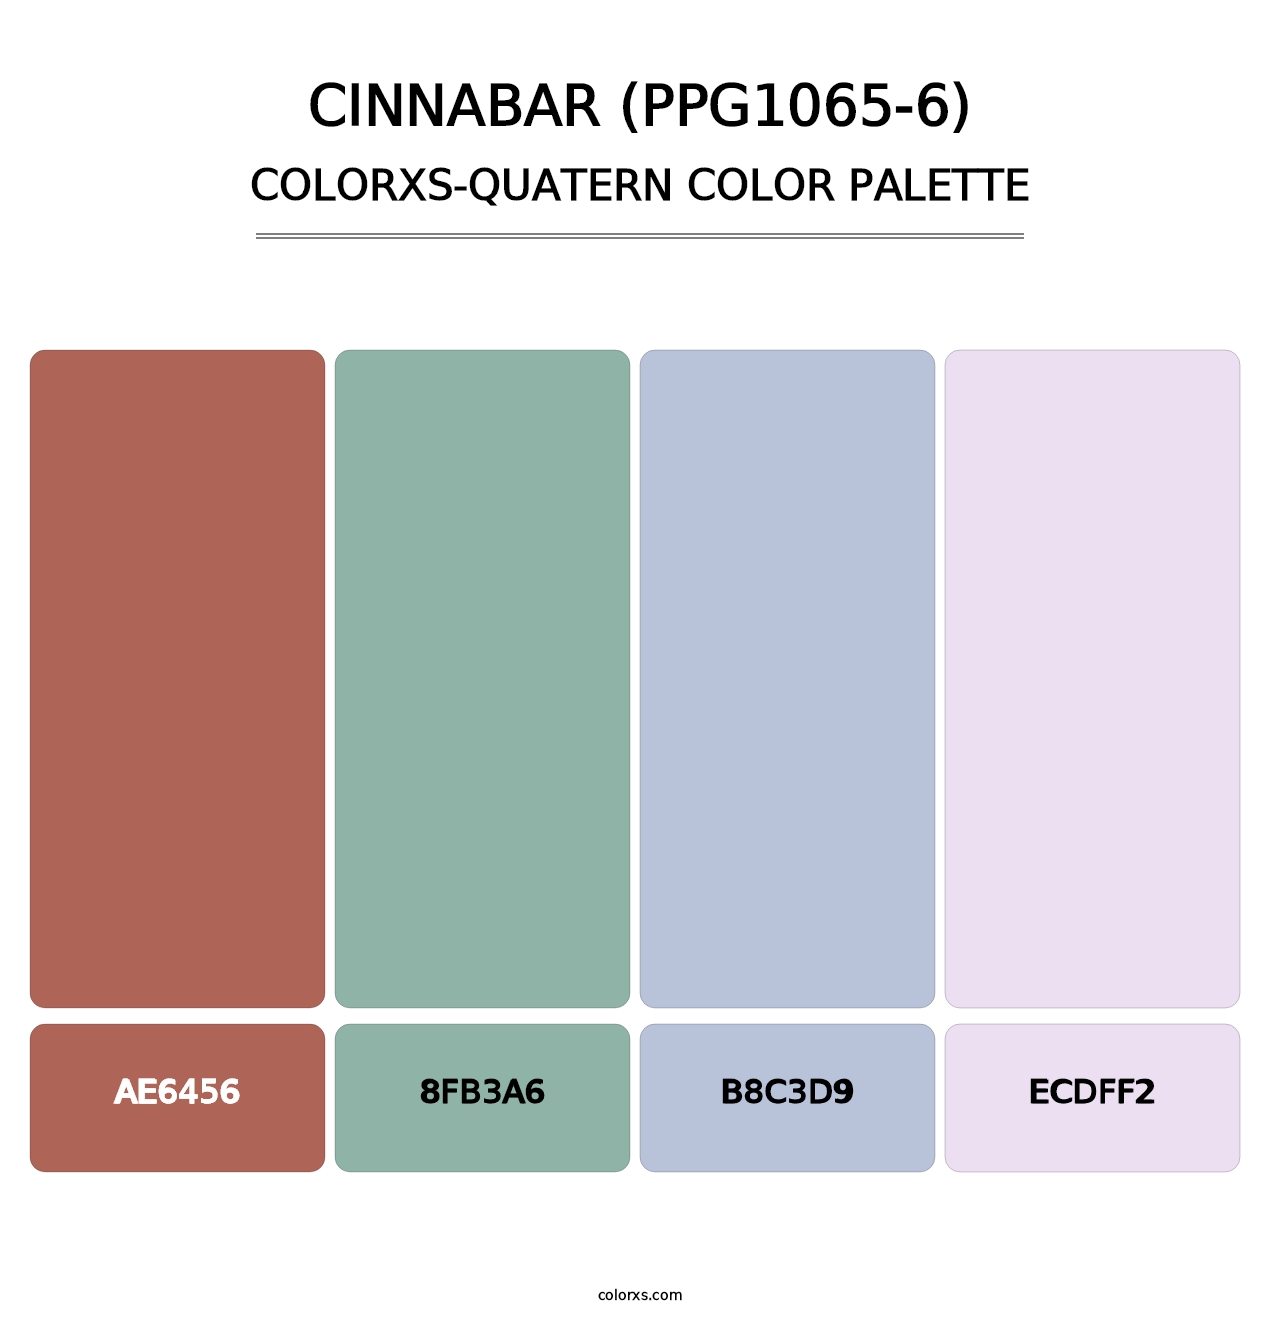 Cinnabar (PPG1065-6) - Colorxs Quatern Palette